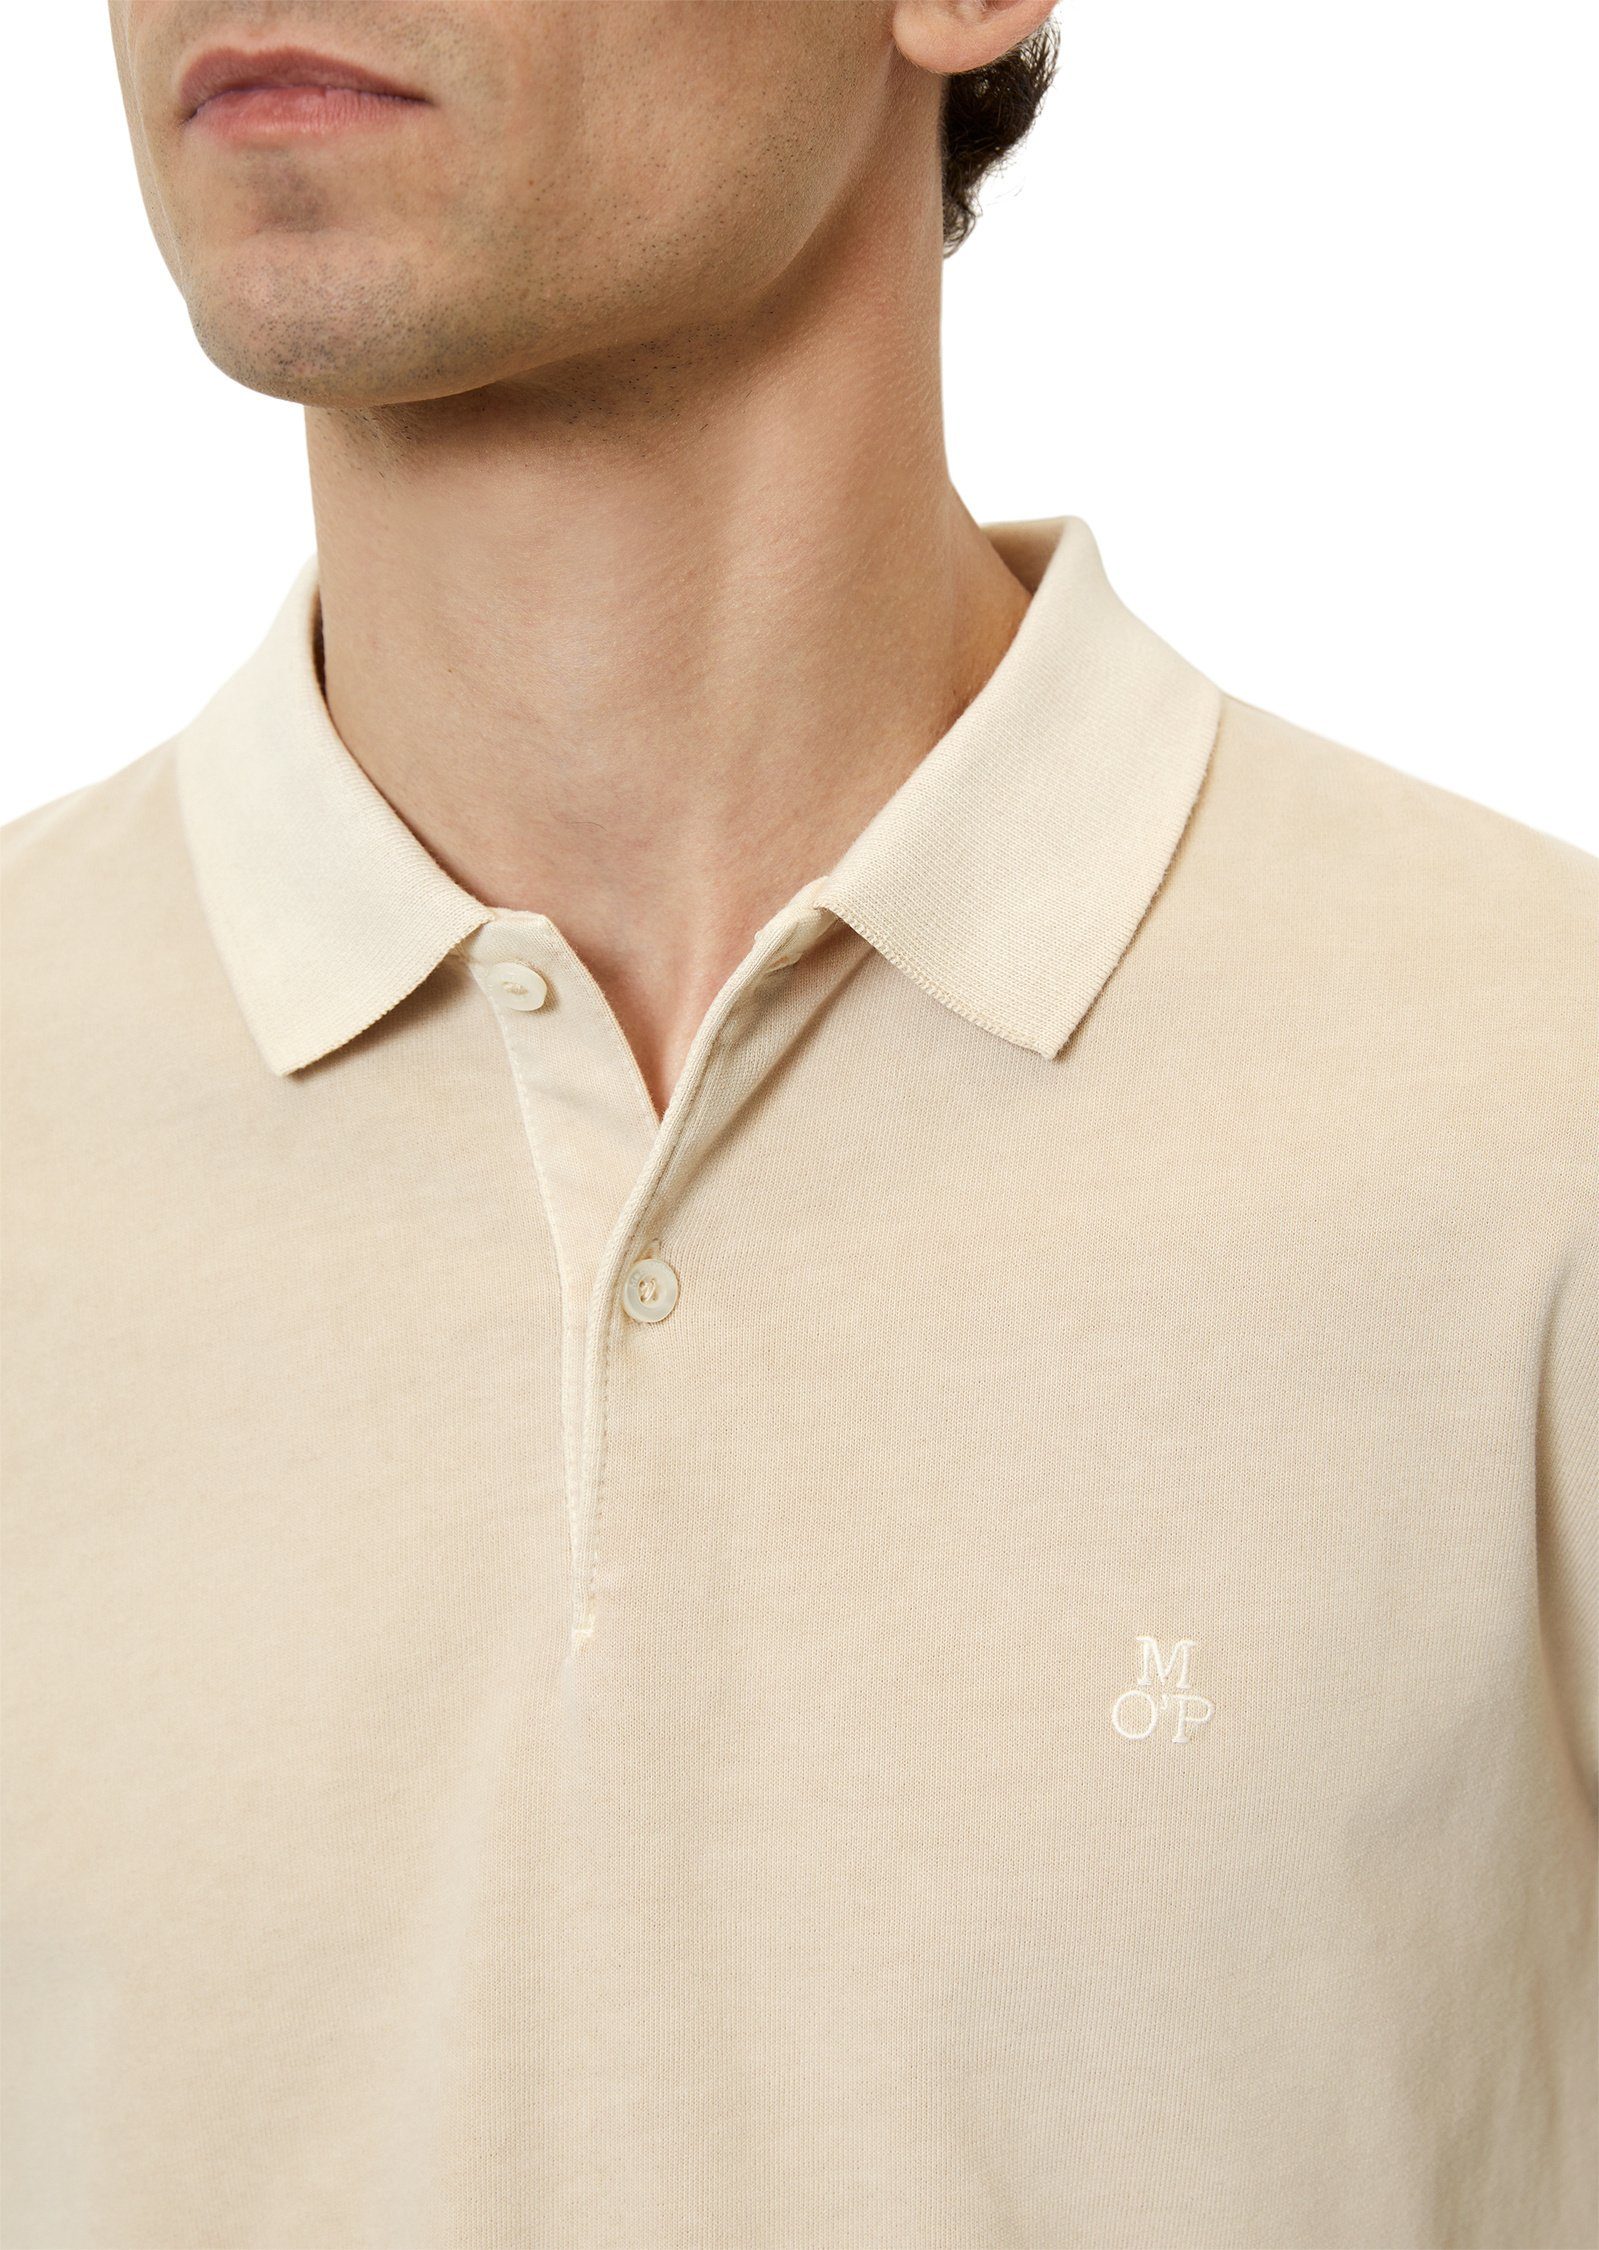 schwerer O'Polo Soft-Touch-Jersey-Qualität Langarm-Poloshirt beige in Marc